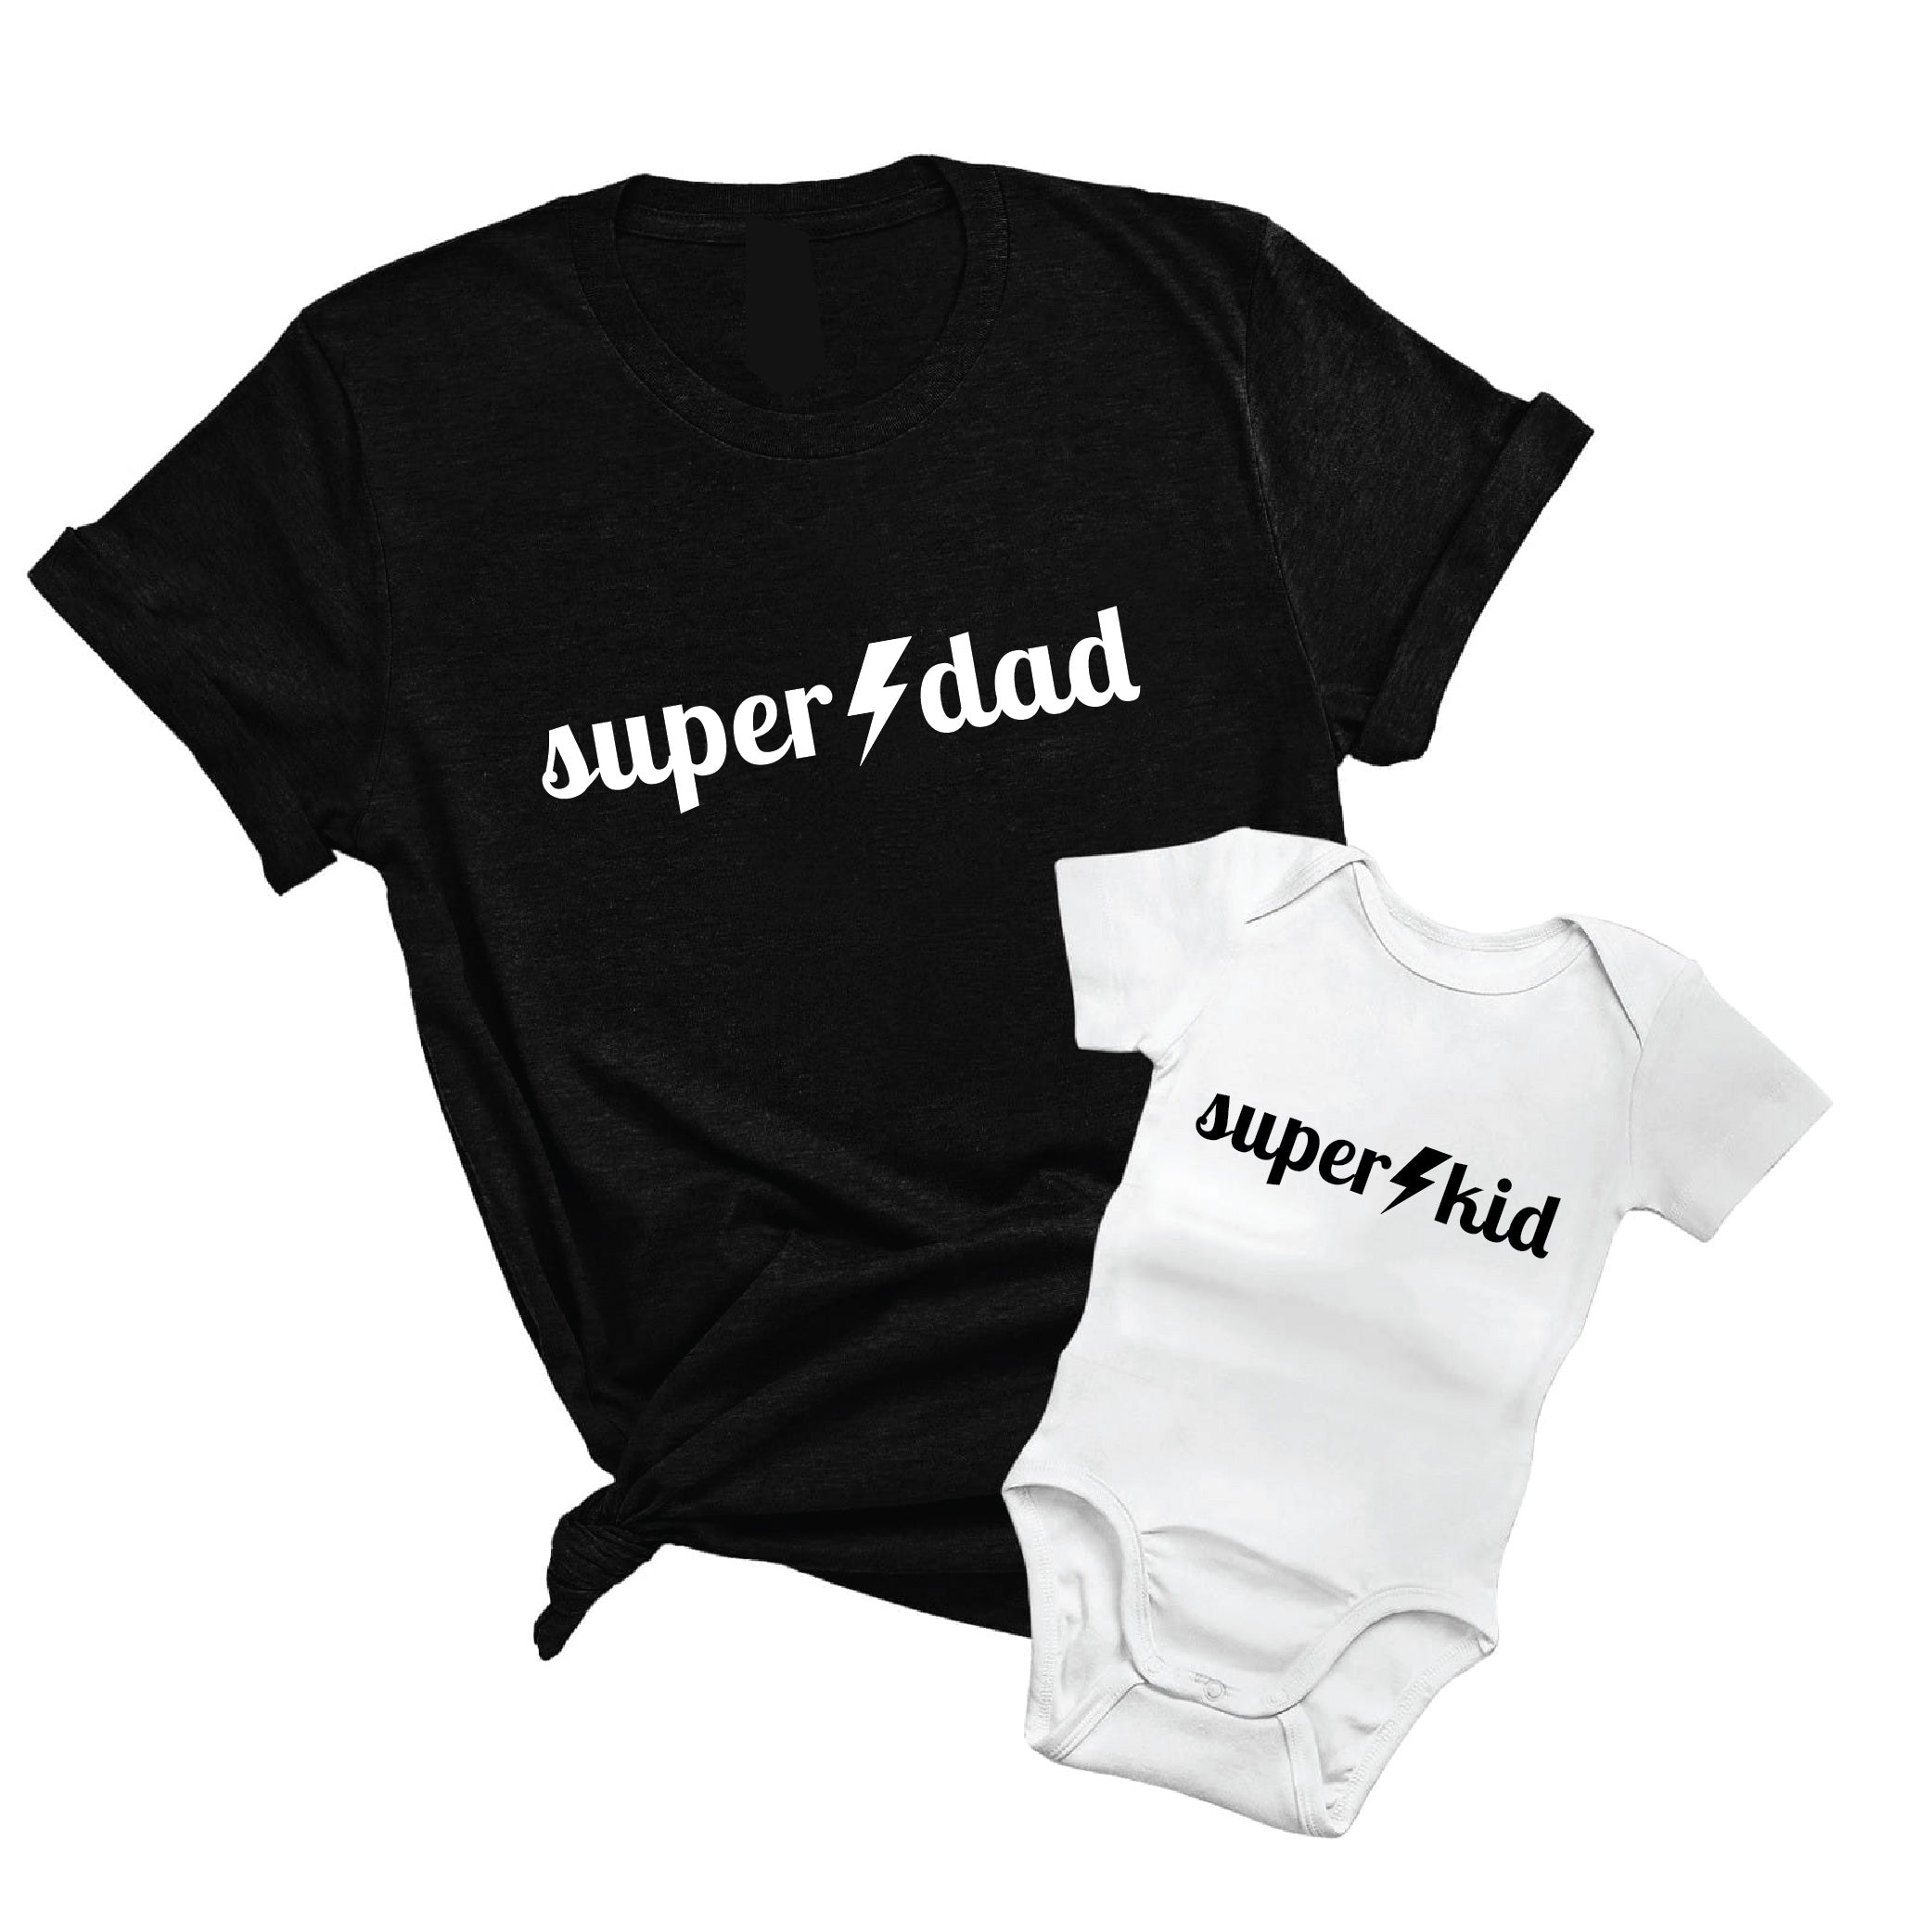 Super Dad, Super Kid - Combo of Adult Tshirt + Kid's Tshirt/Onesie